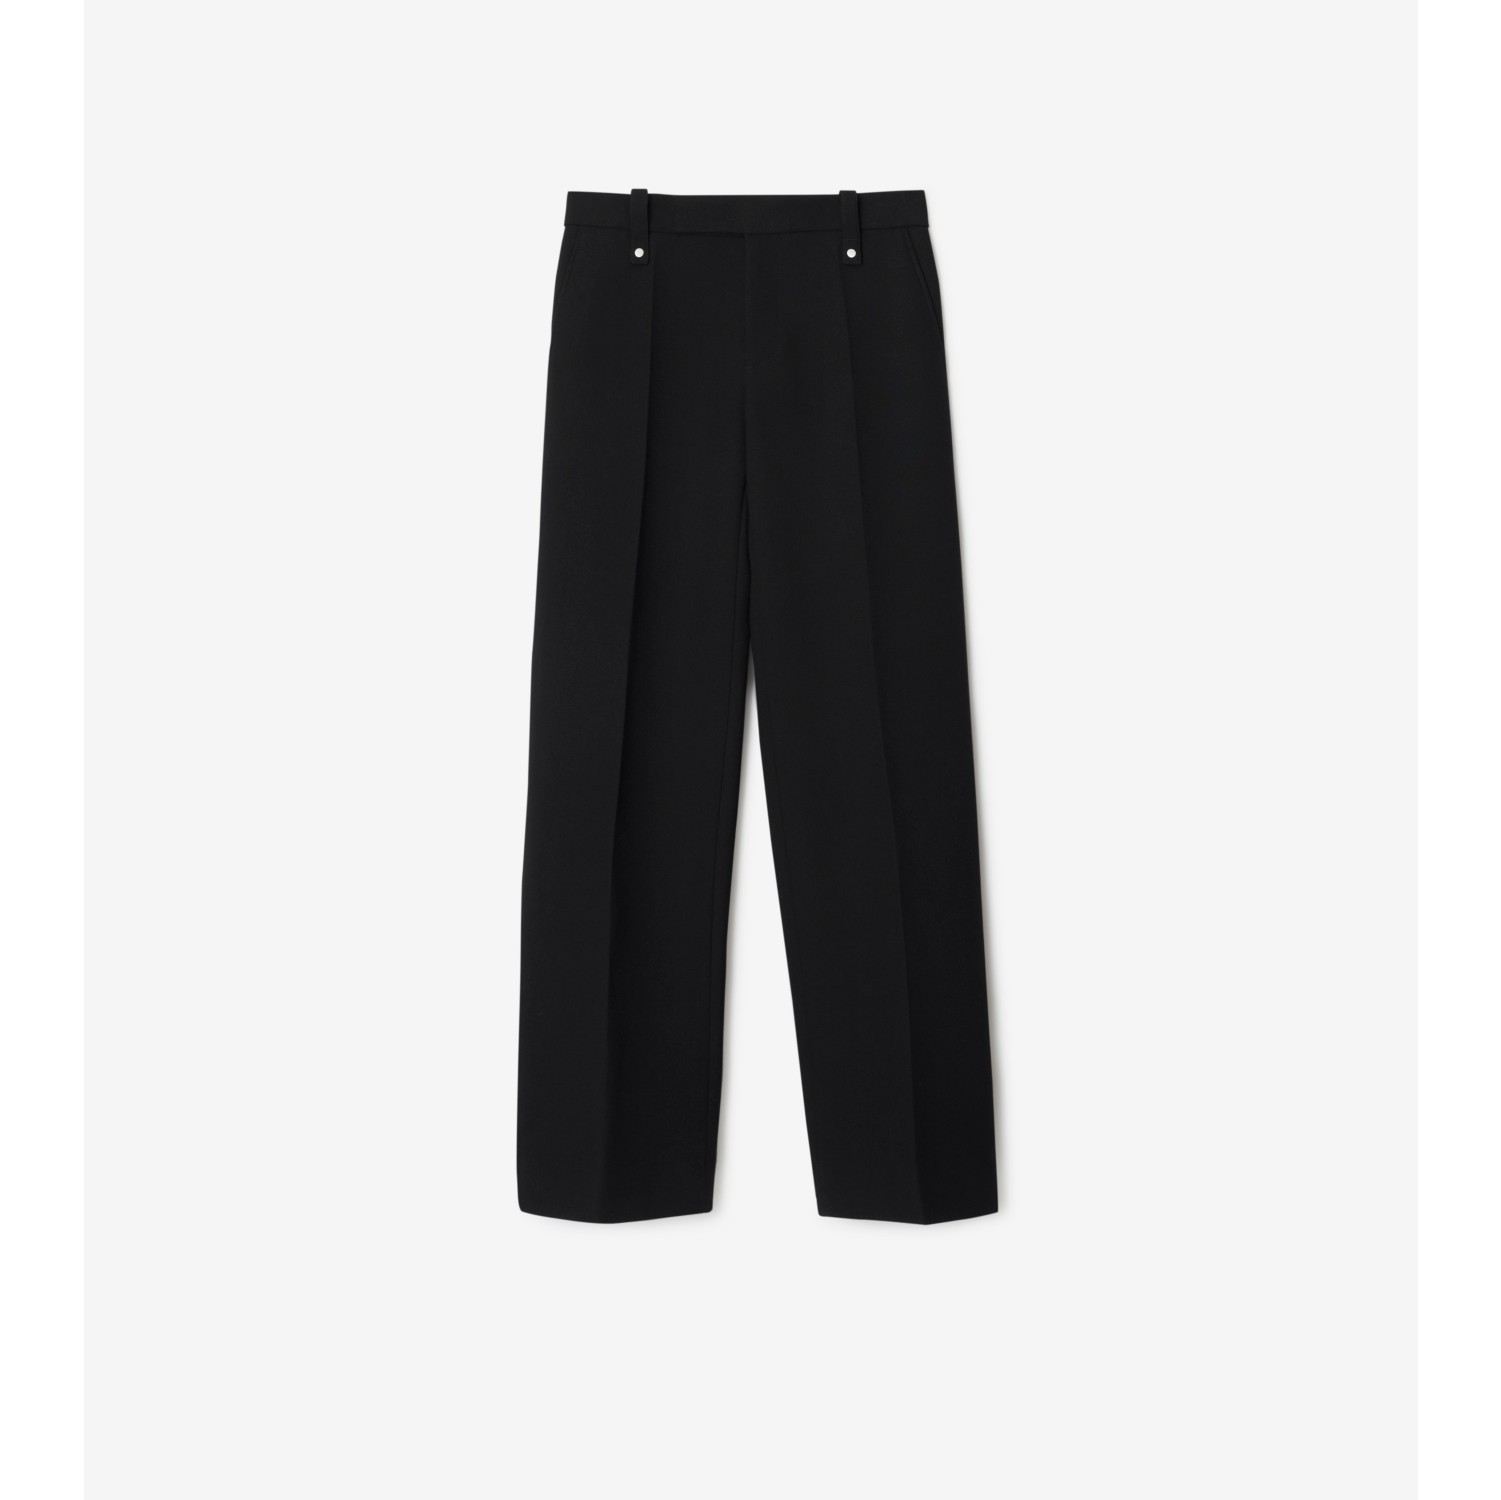 Buy KOTTY Women Solid Polyester Blend Black Trouser (Black,26) at